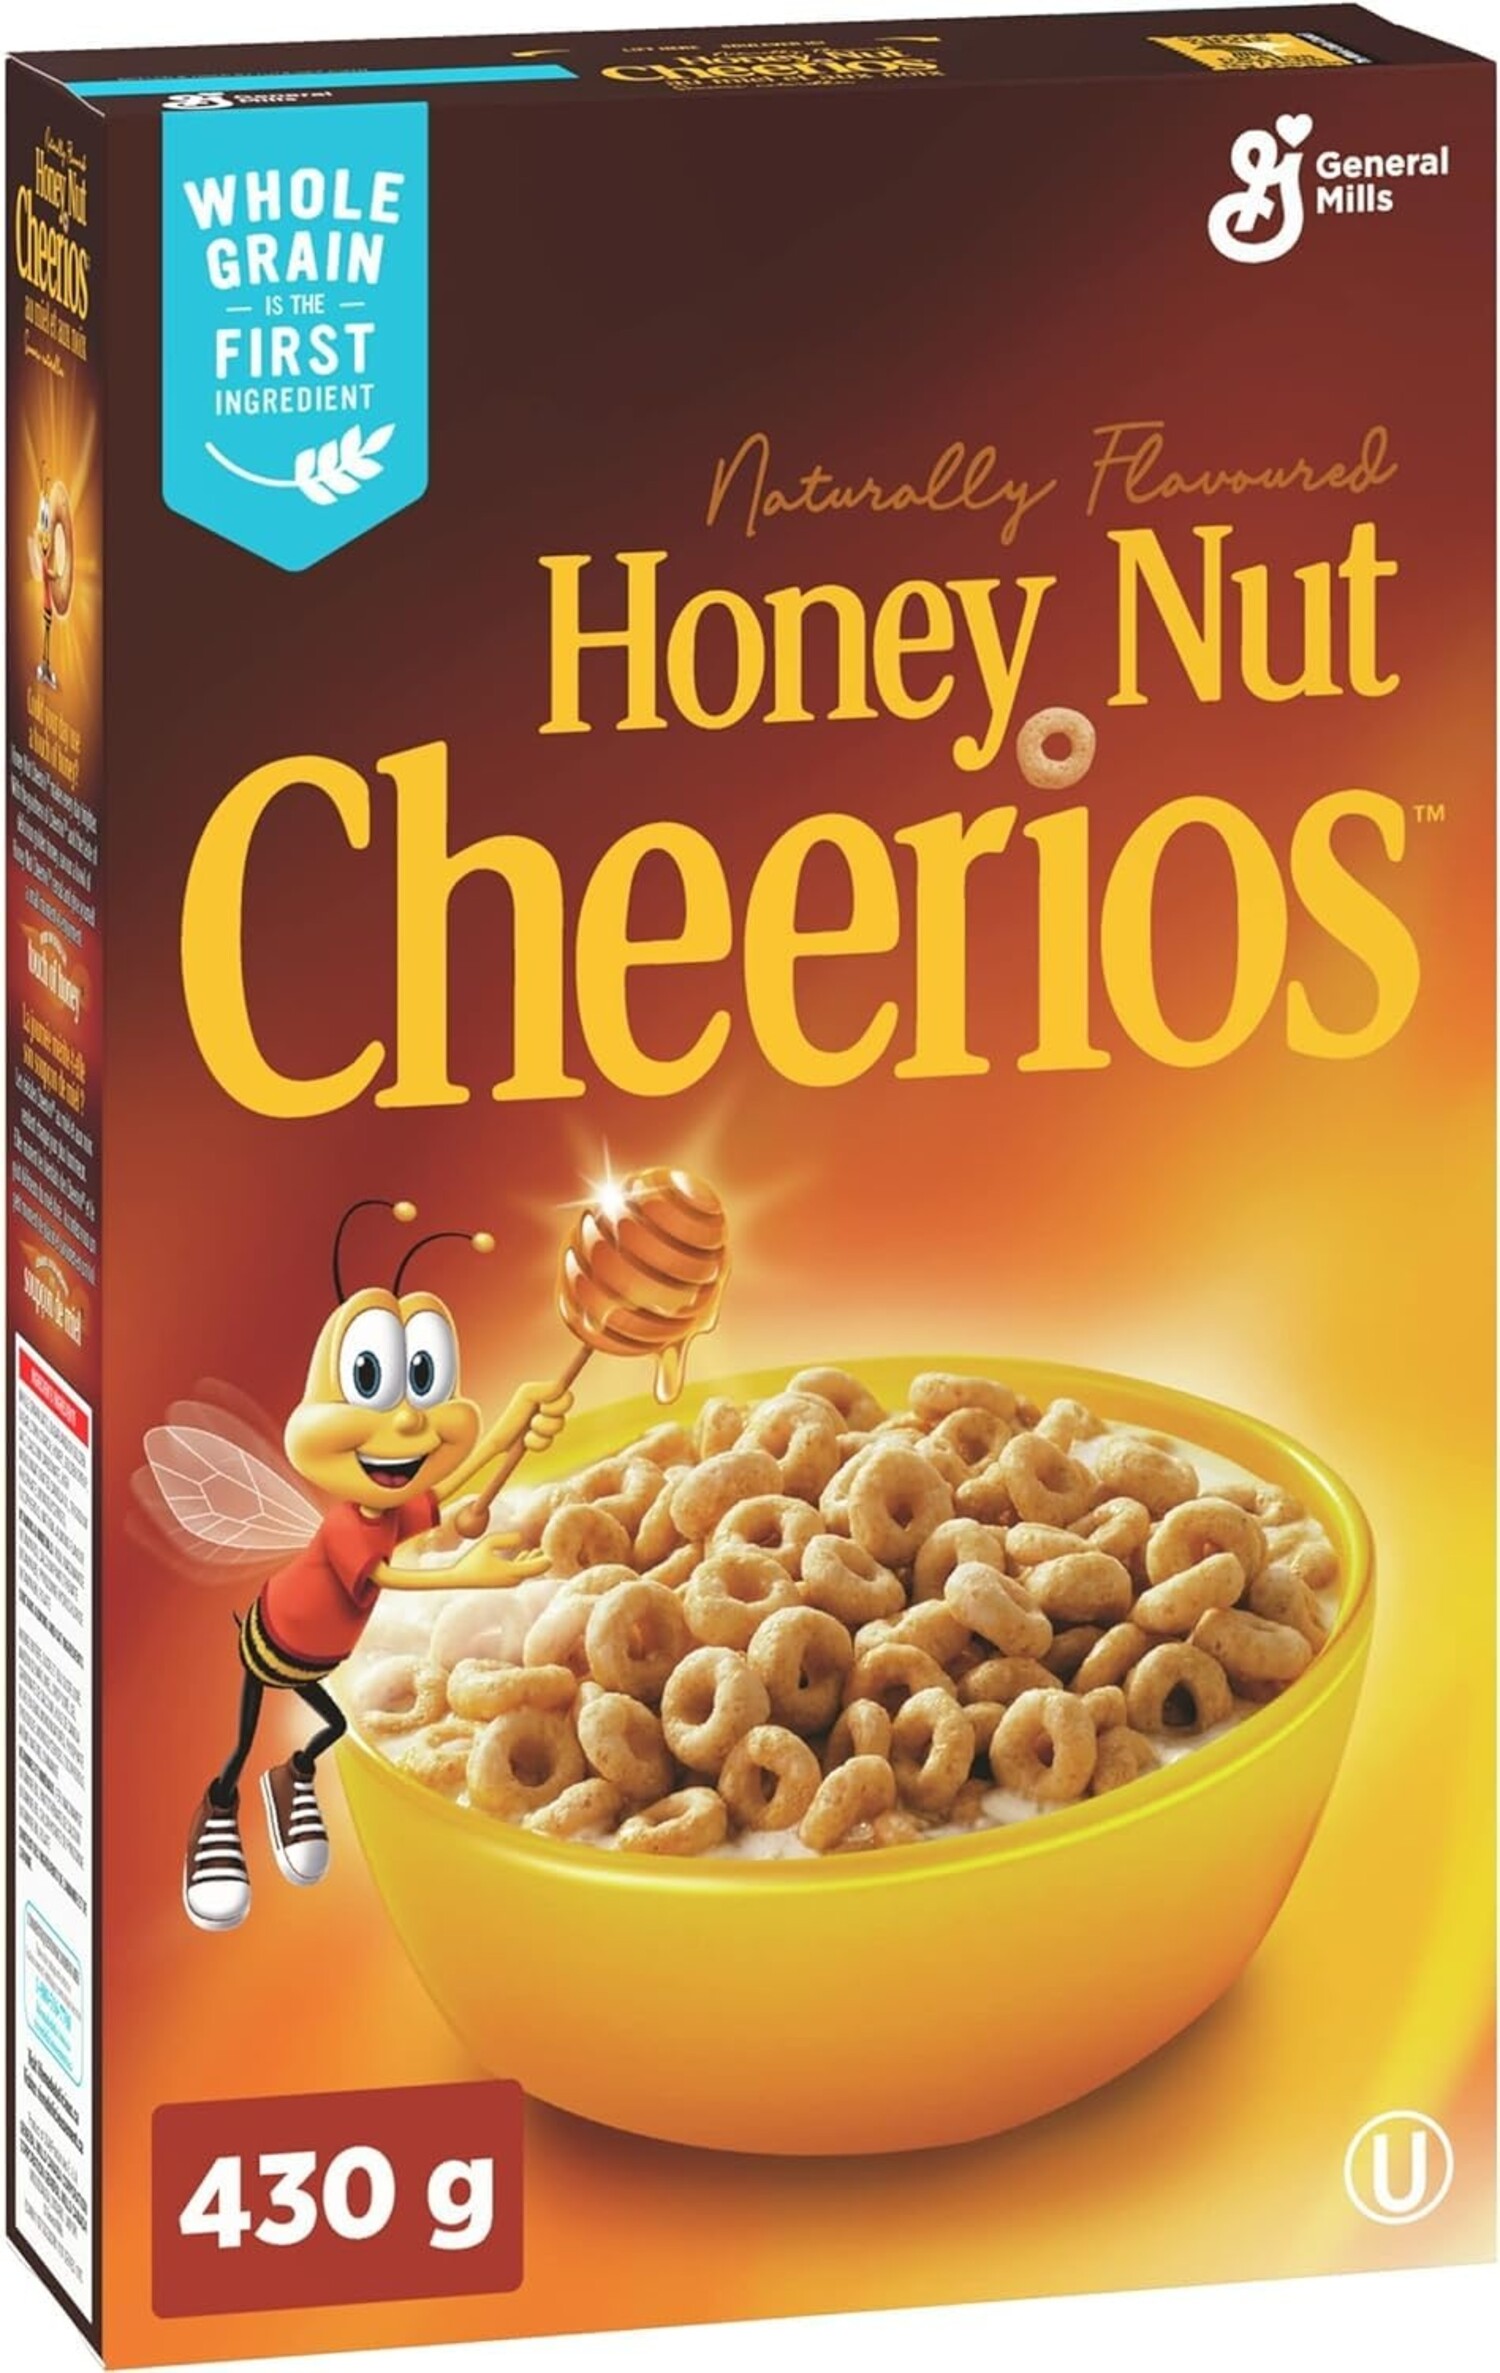 Cheerios Cereal, Gluten Free, Honey Nut - FRESH by Brookshire's